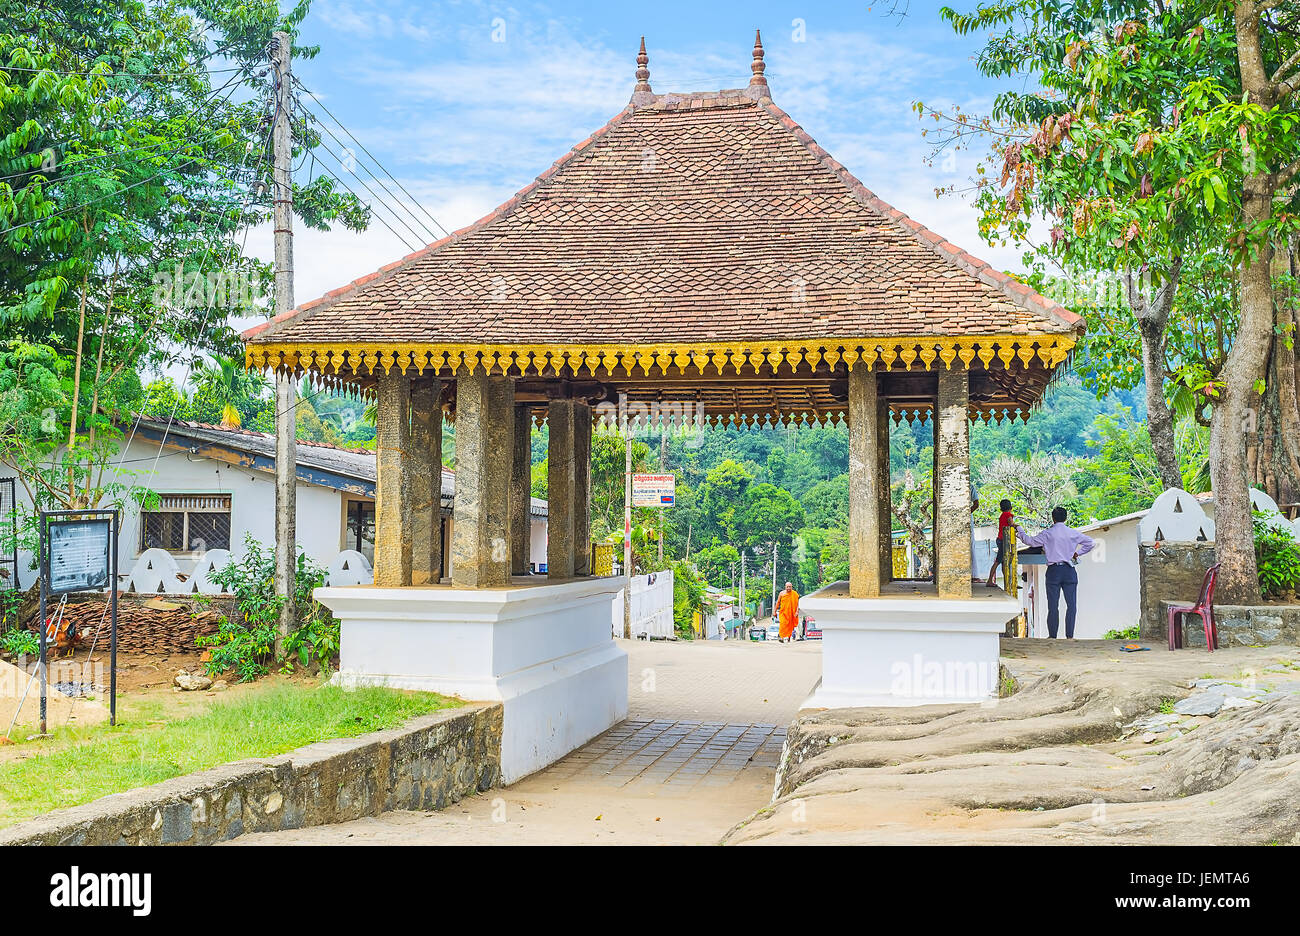 UDUNUWARA, SRI LANKA - NOVEMBER 29, 2016: The gate of Lankathilaka Vihara with old stone pillars and carved wooden roof, covered with tile, on Novembe Stock Photo